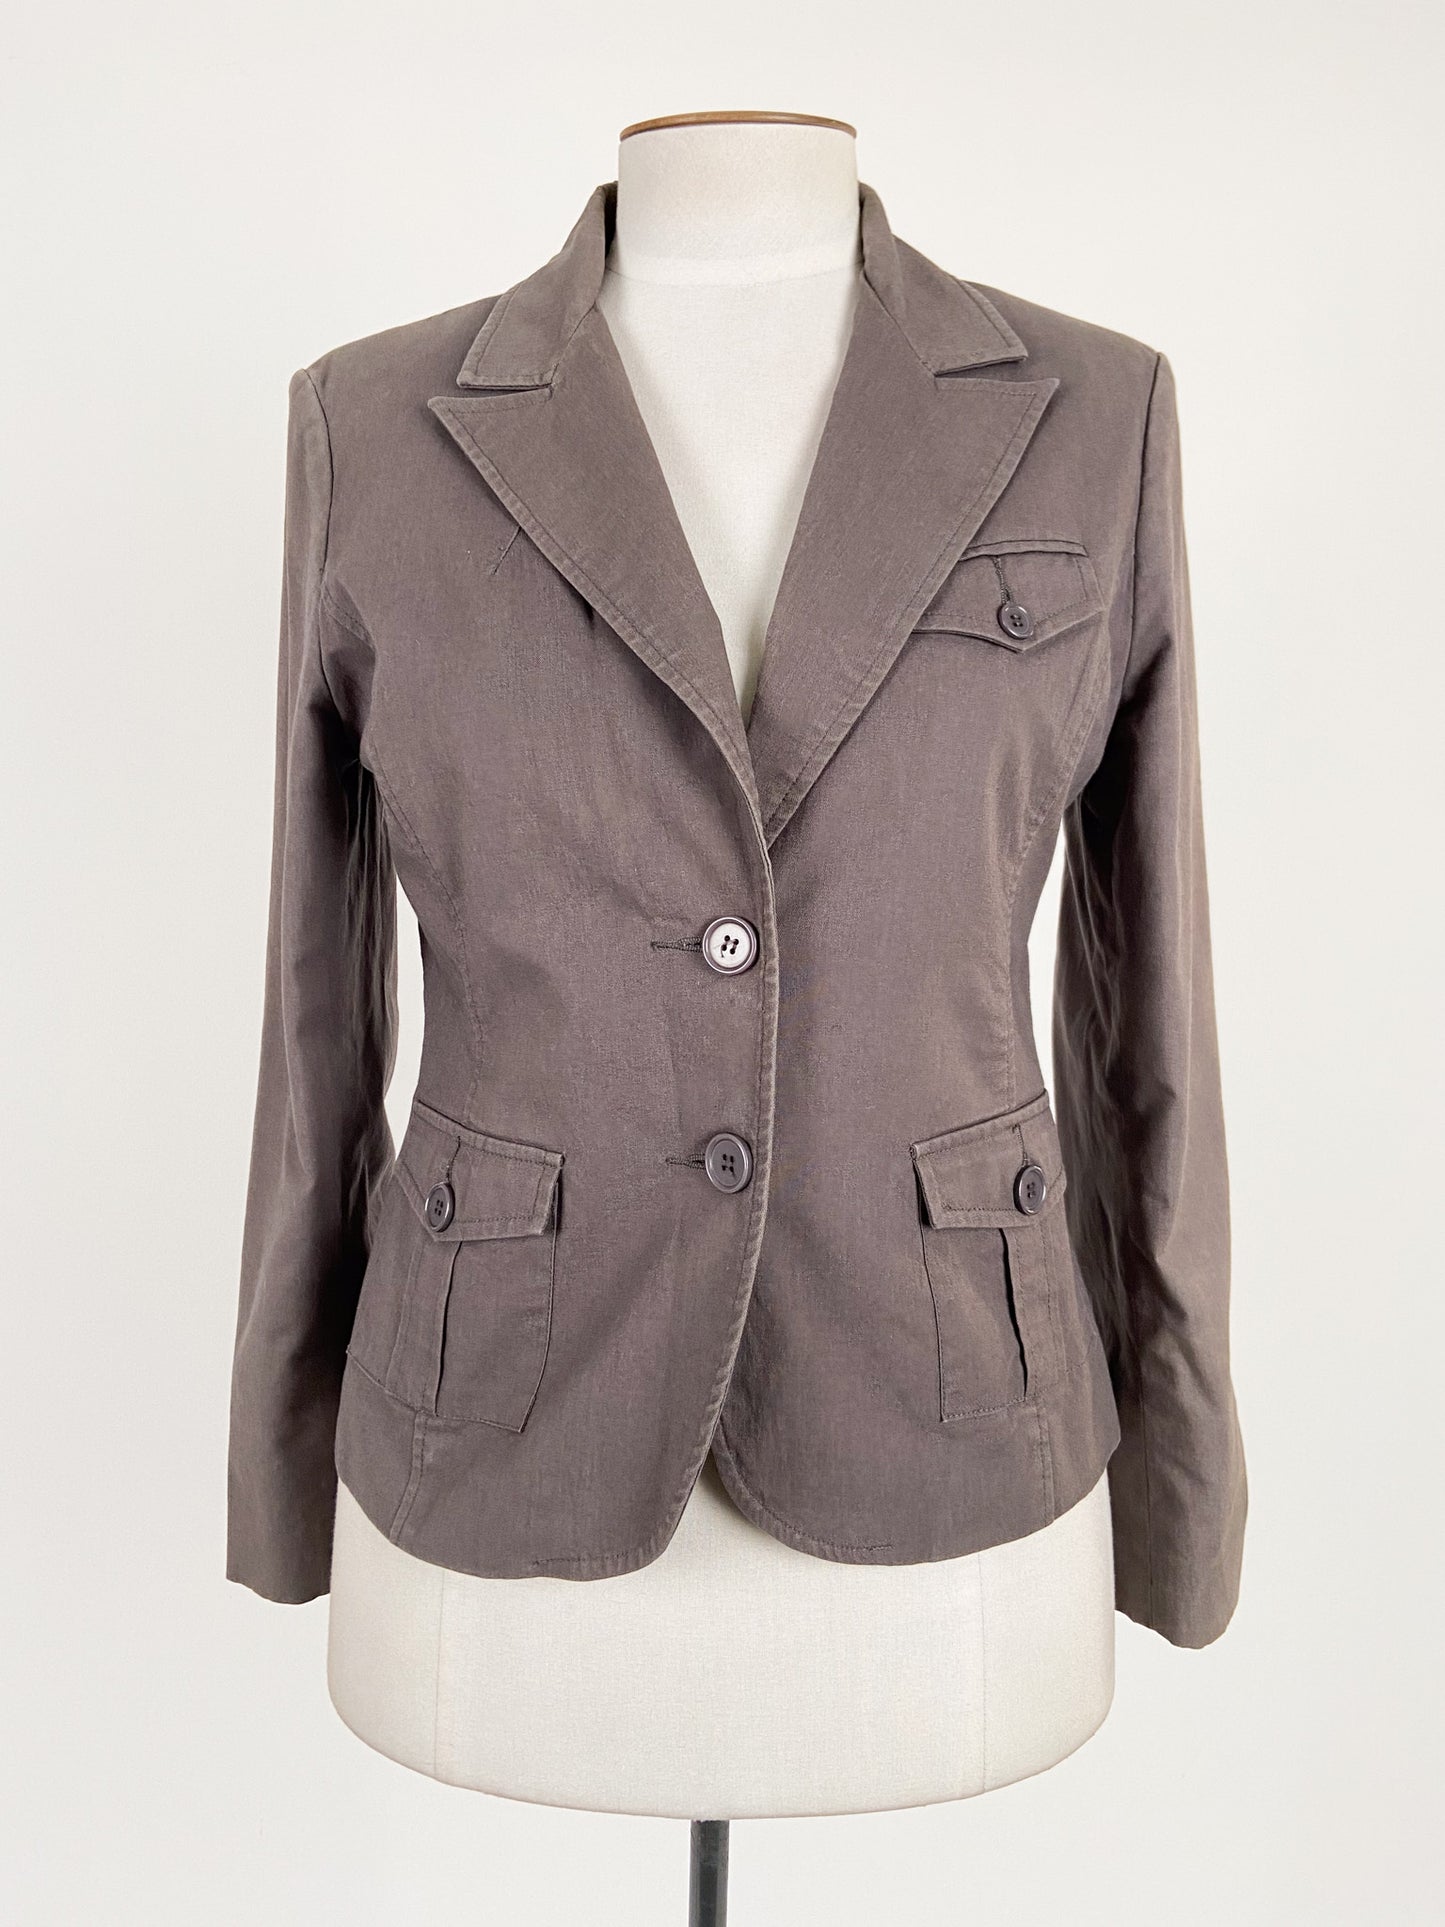 Max | Grey Workwear Jacket | Size 12